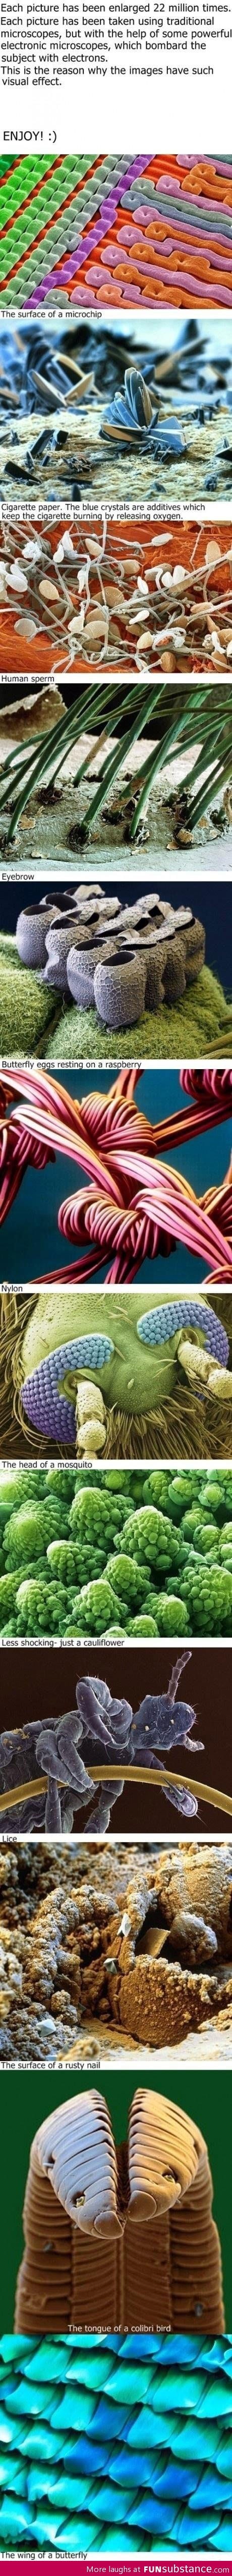 Under a microscope